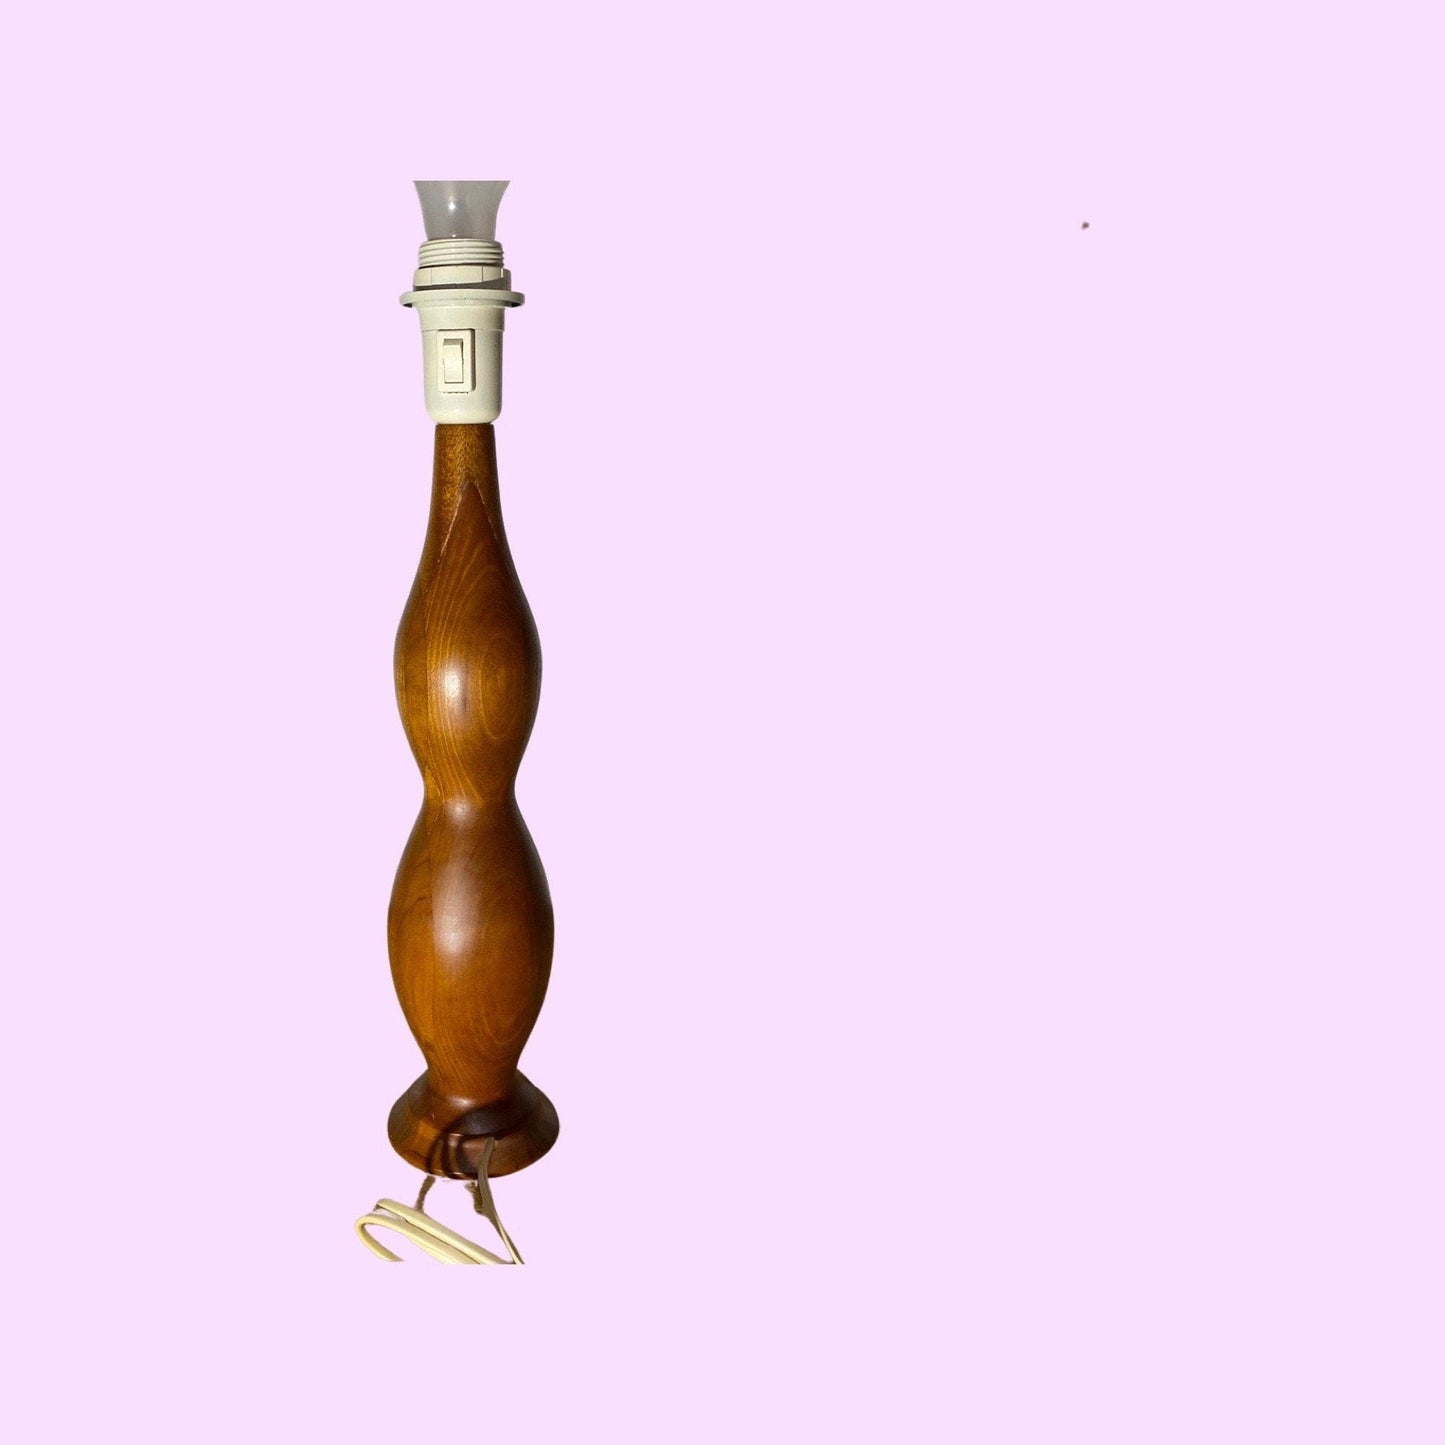 Big Rare Teak Table Lamp From Denmark 1960s | Mid century Modern Vintage Lighting | Vintage Danish Design Desk Lamp | Scandinavian Lighting - FancyVintage.nl -